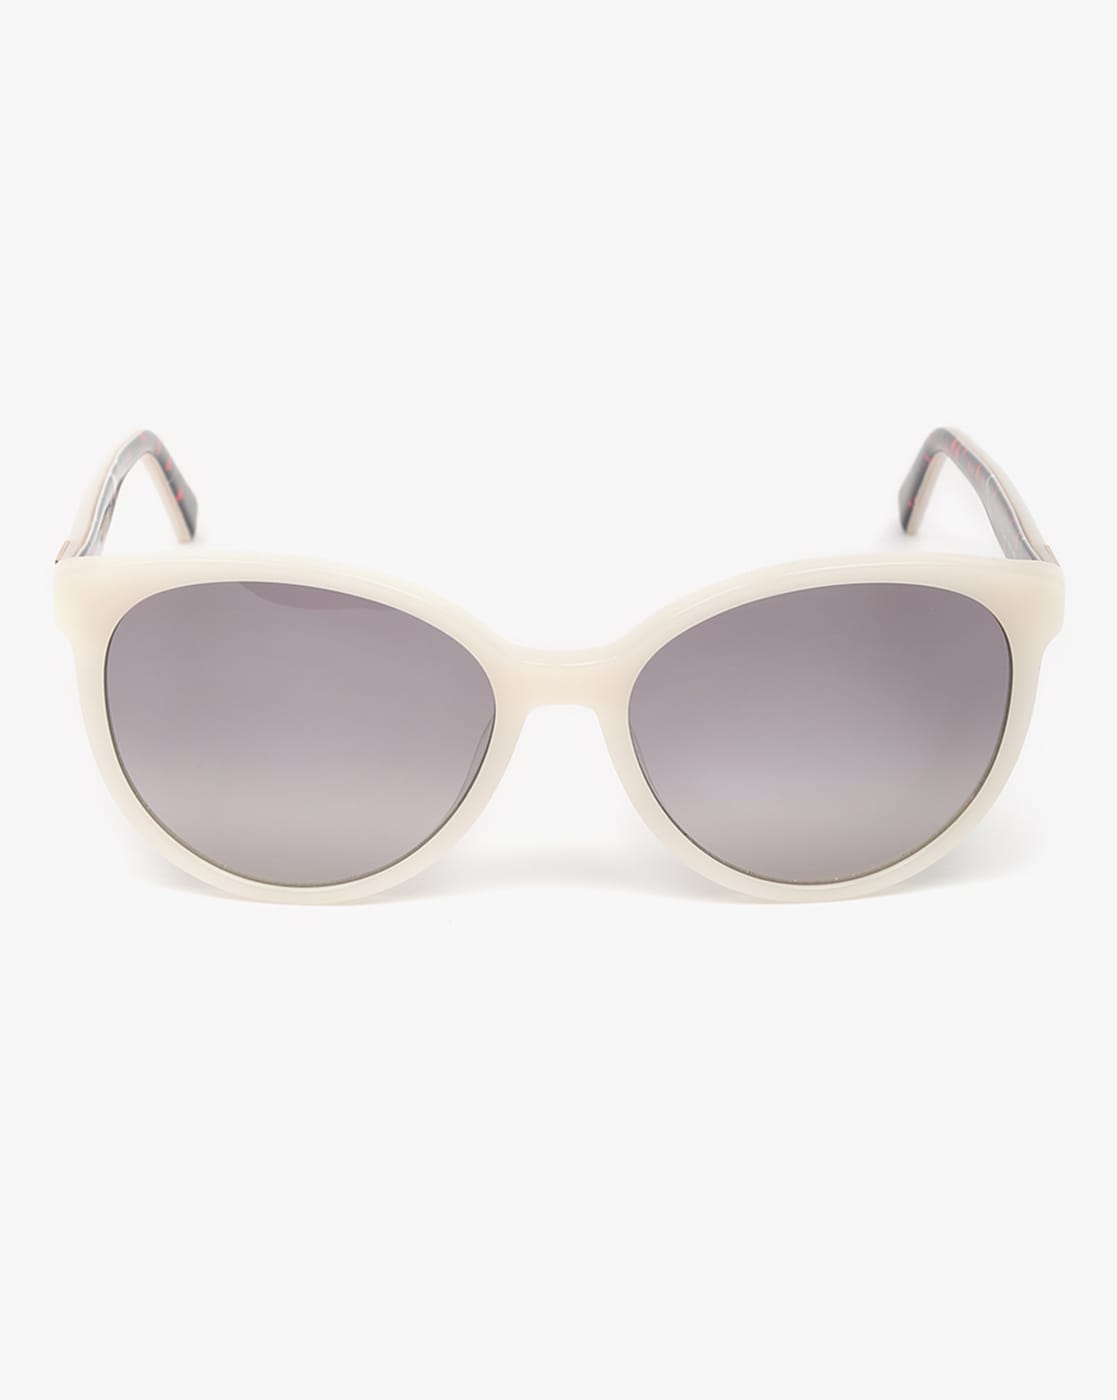 Trendy Sunglasses - White Sunglasses - Oval Sunglasses - Lulus